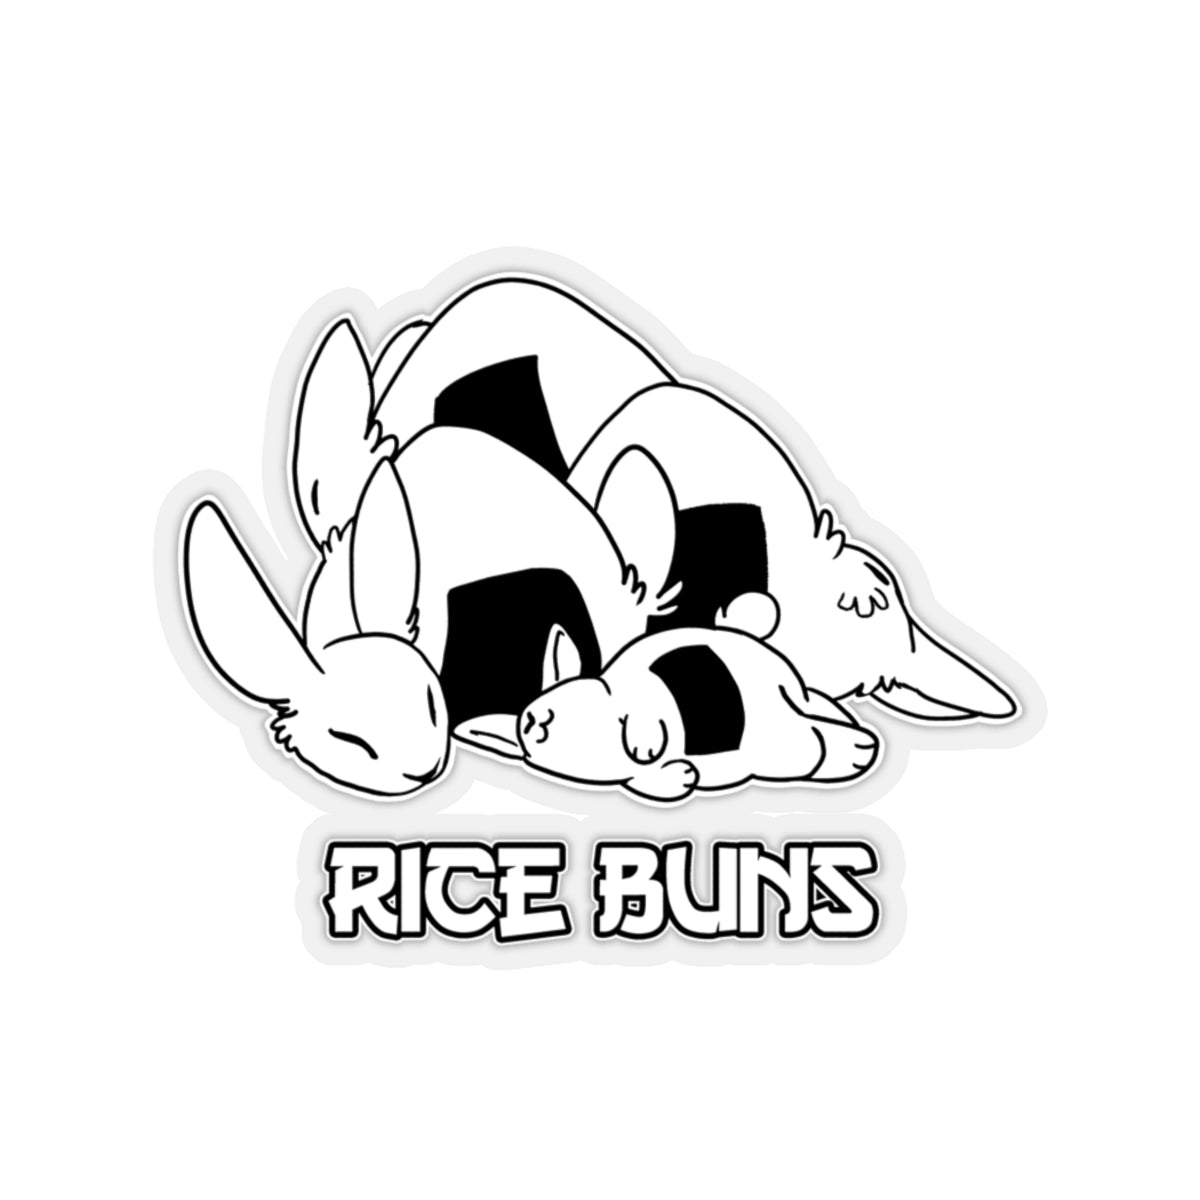 Rice Buns - Sticker Sticker Artworktee 